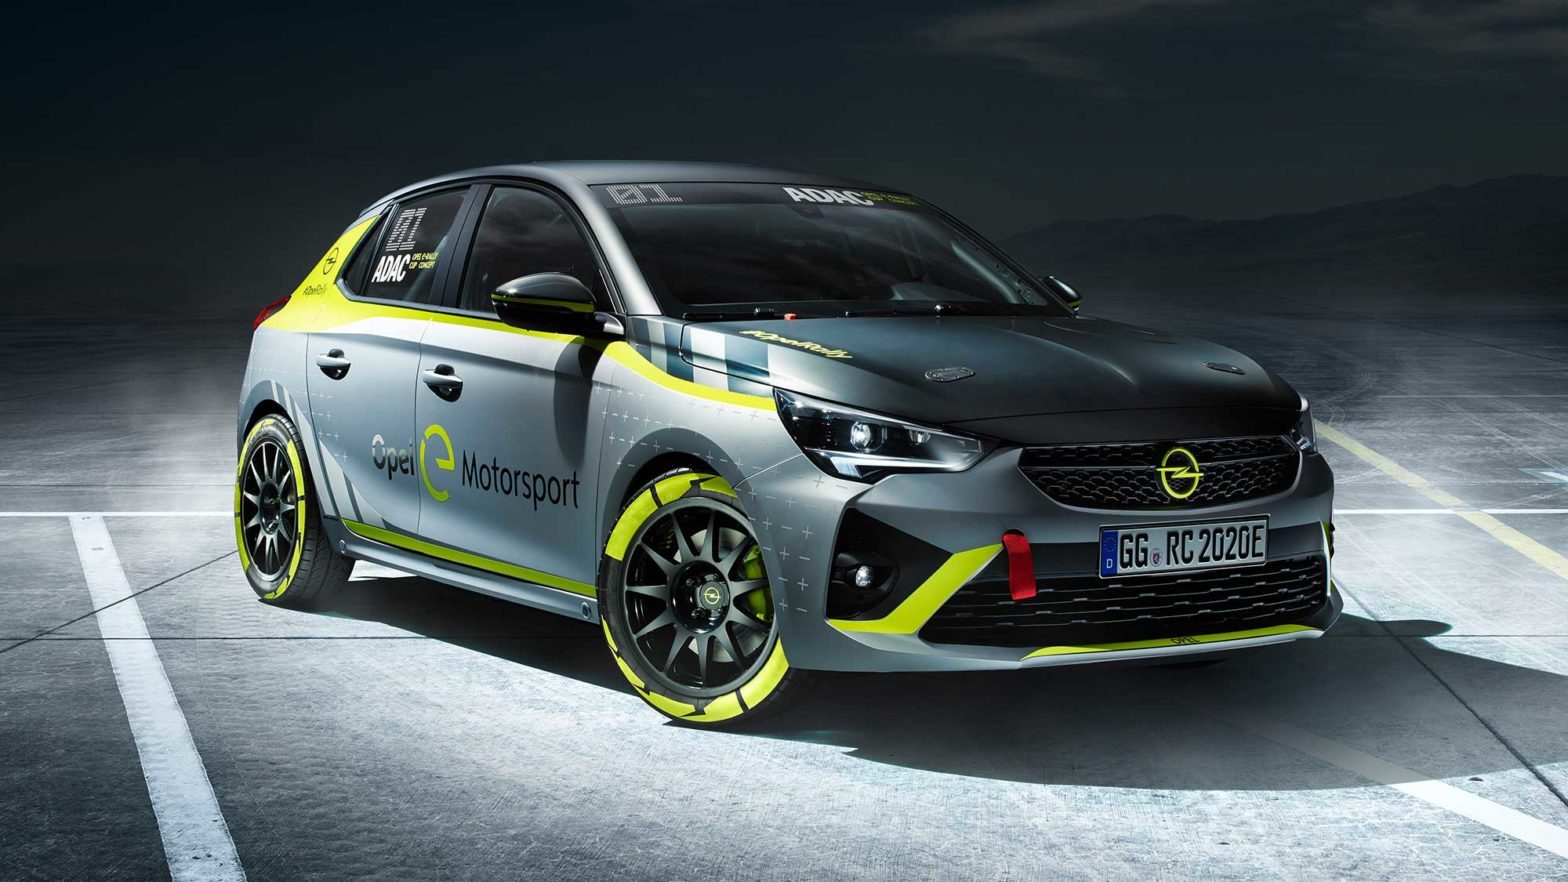 Opel-Corsa-e-Rally-Car-Frankfurt-Motor-Show-Featured-image-copy-1568x882.jpg